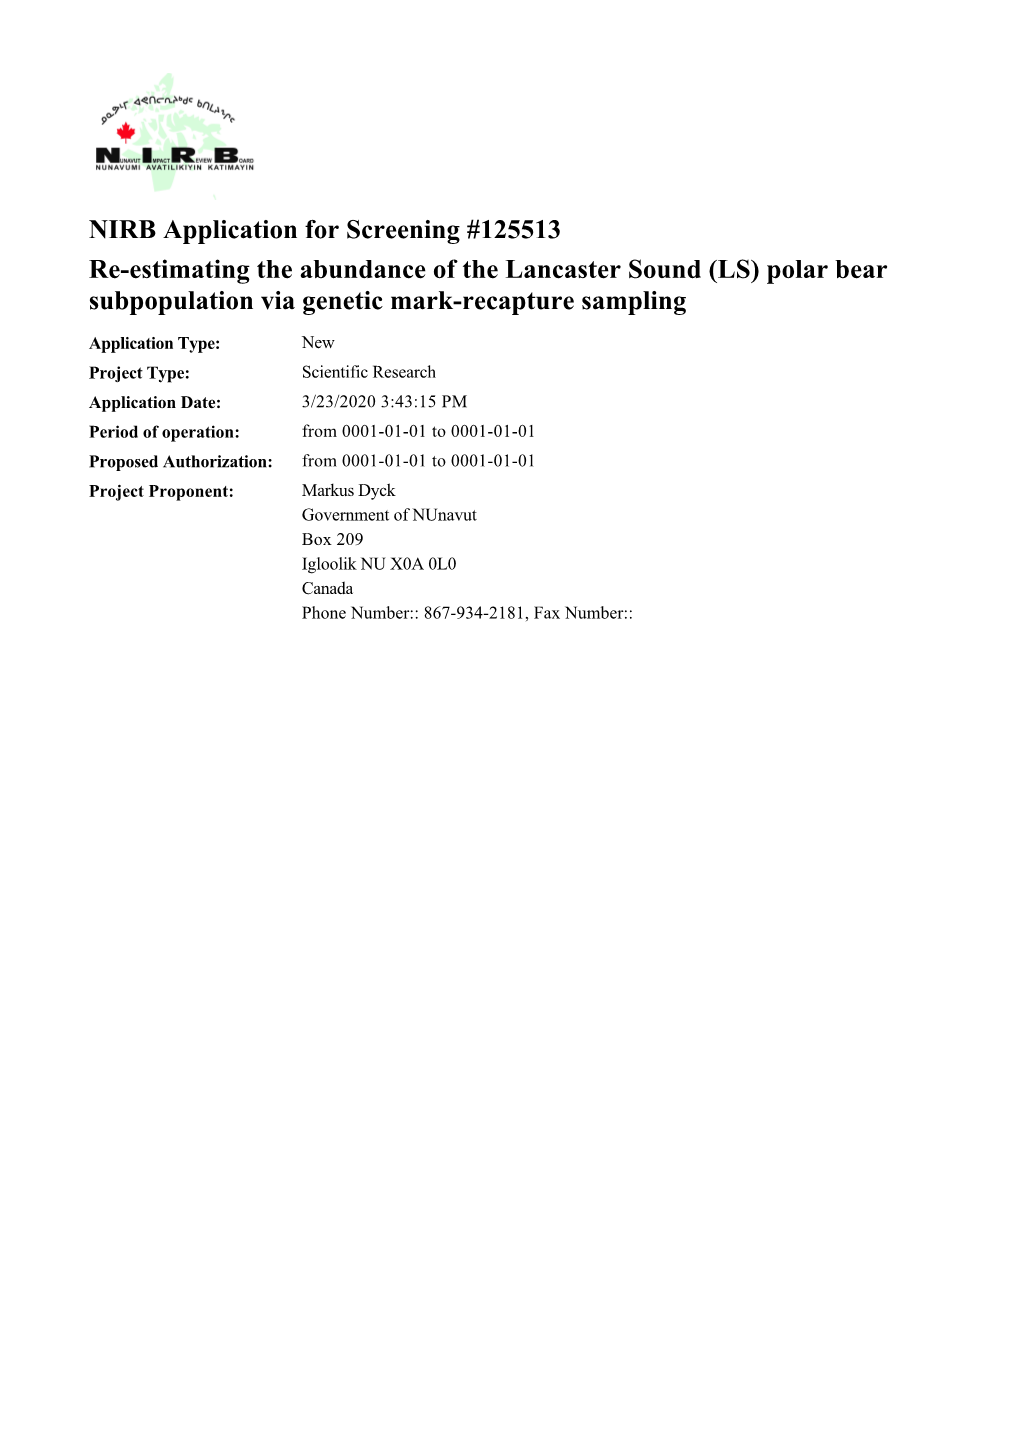 NIRB Application for Screening #125513 Re-Estimating the Abundance of the Lancaster Sound (LS) Polar Bear Subpopulation Via Genetic Mark-Recapture Sampling